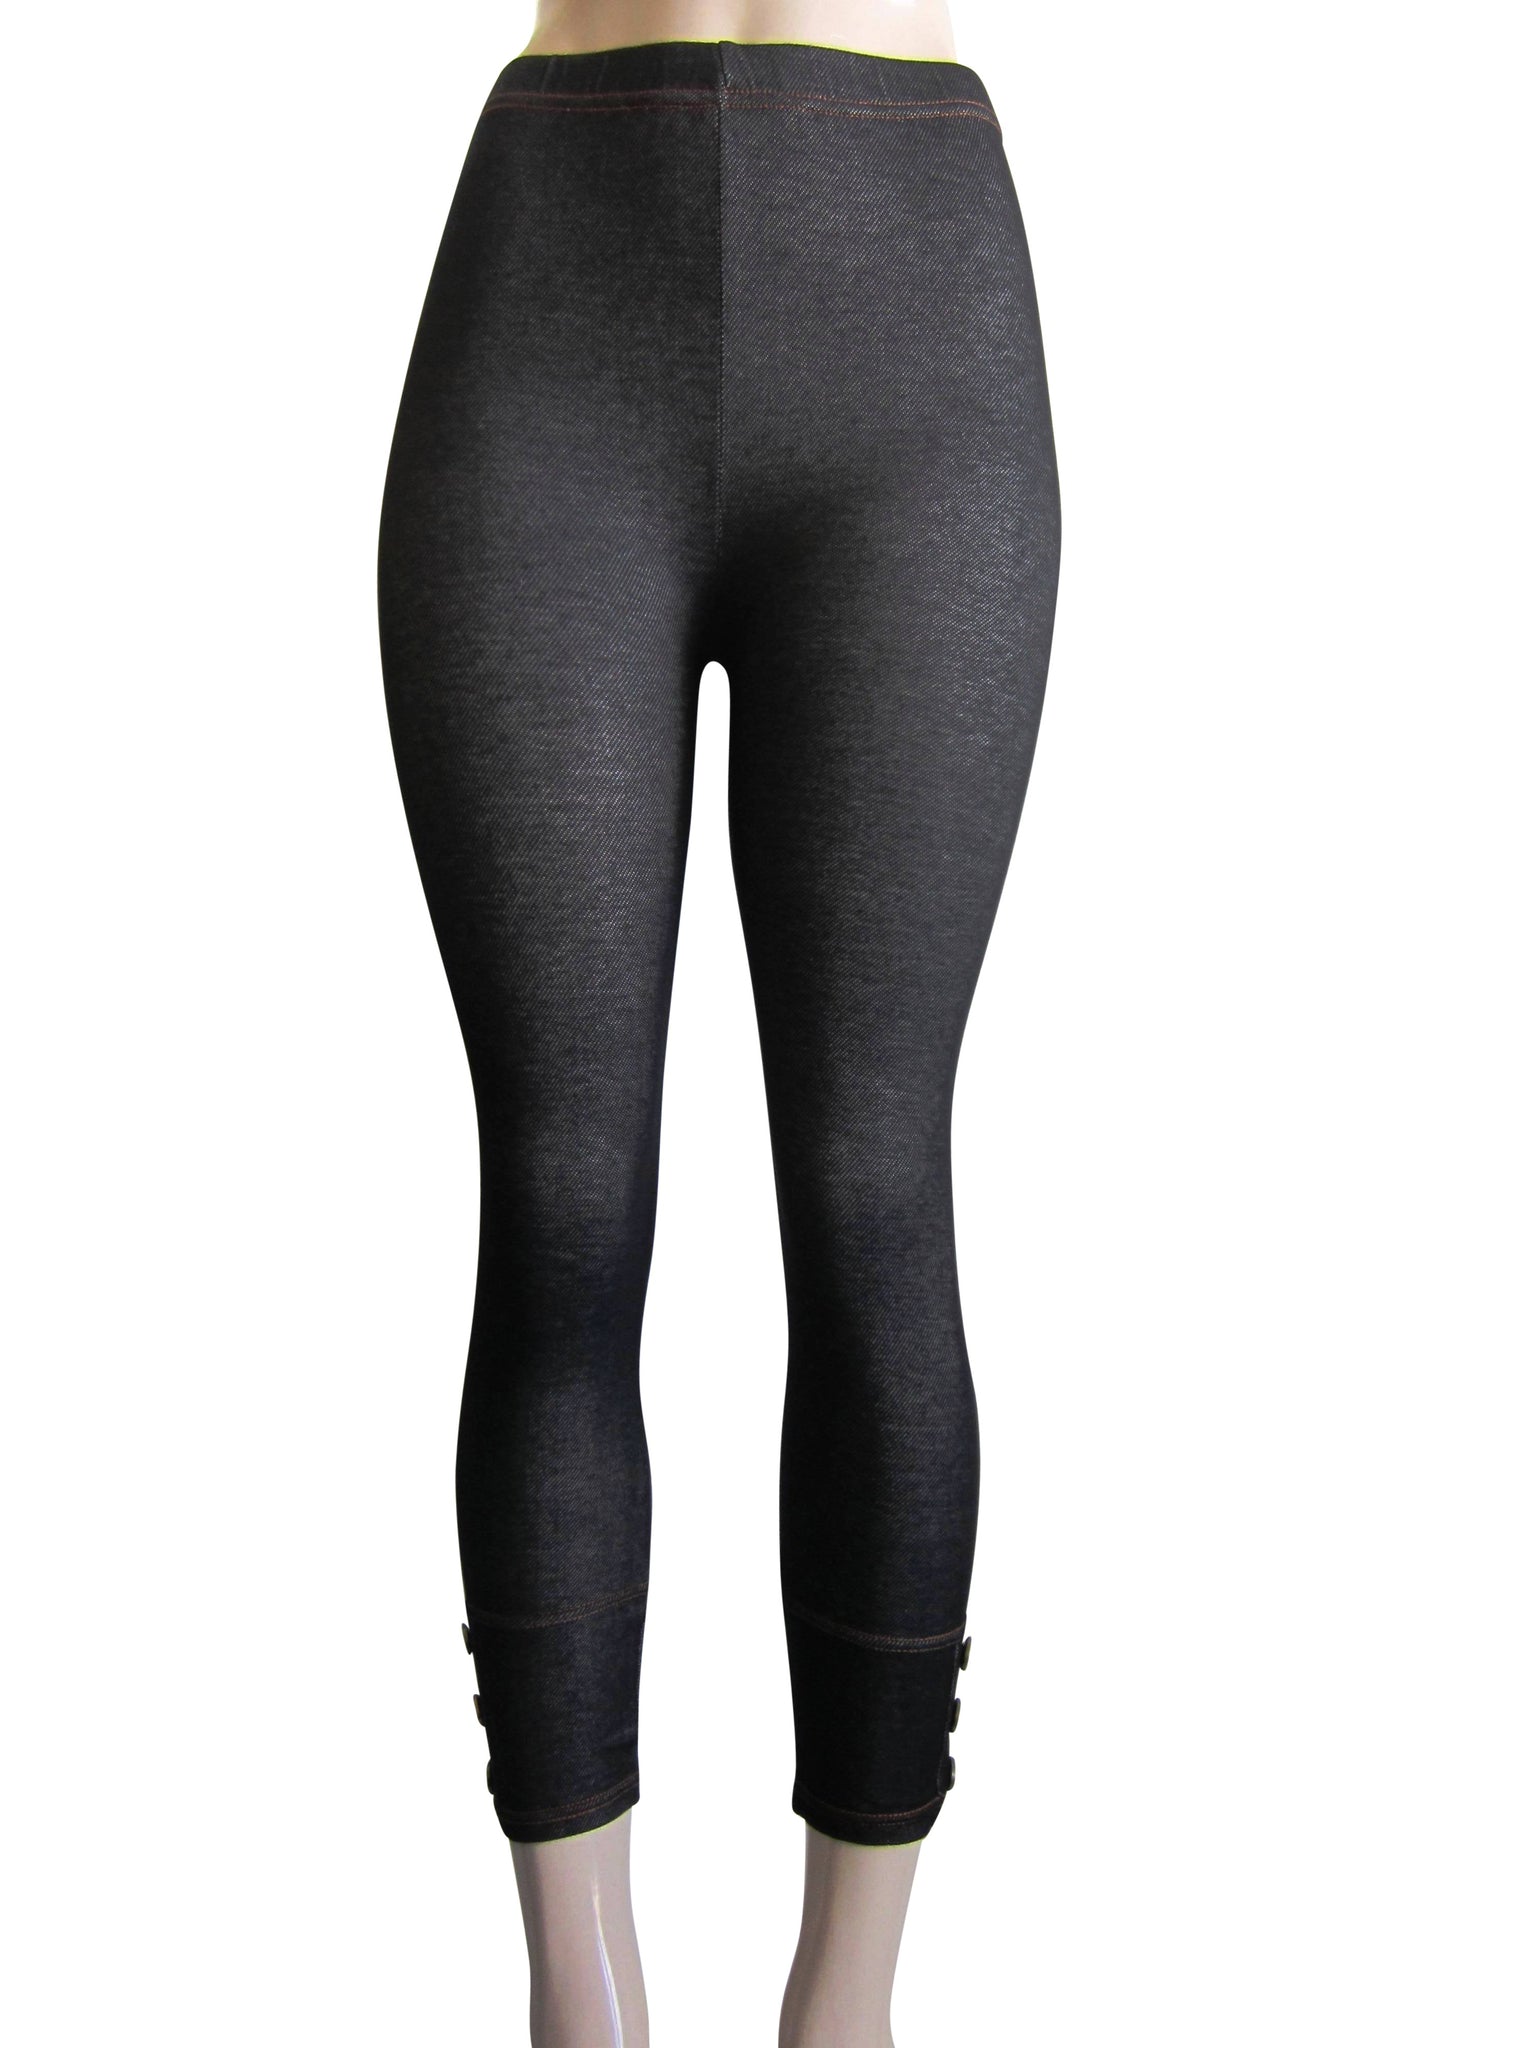 Buy BRATS N BEAUTY®- Light Grey Color Women/Ladies/Girl Slimfit Denim Look  Happy Day Look Print Legging at Amazon.in